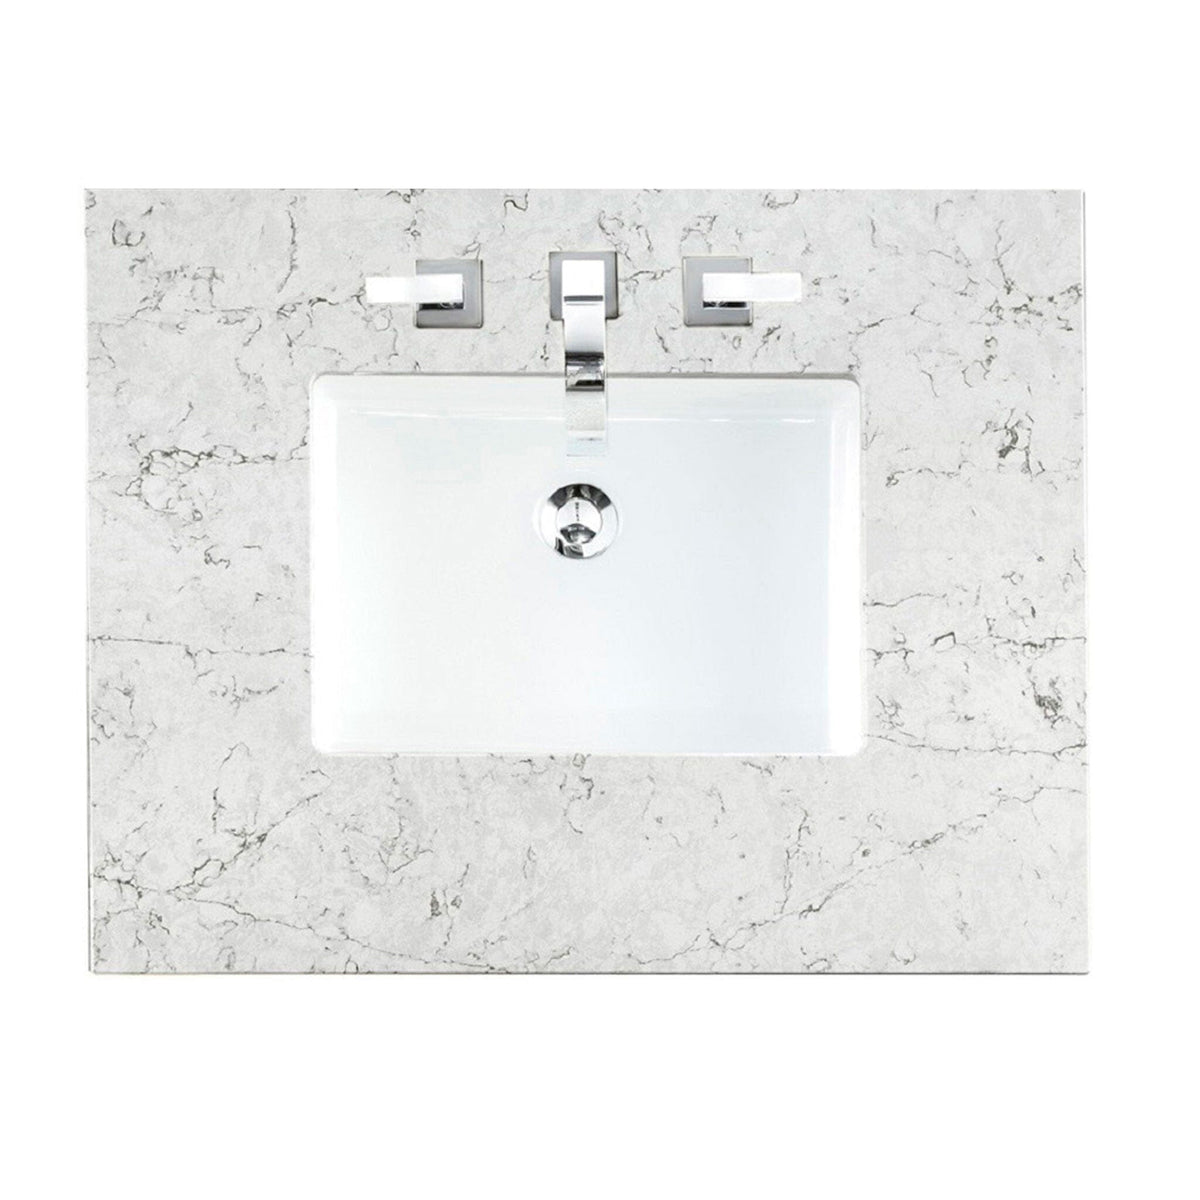 87" Athens Glossy White Single Sink Bathroom Vanity Deluxe Set with 3cm Eternal Jasmine Pearl Quartz Top